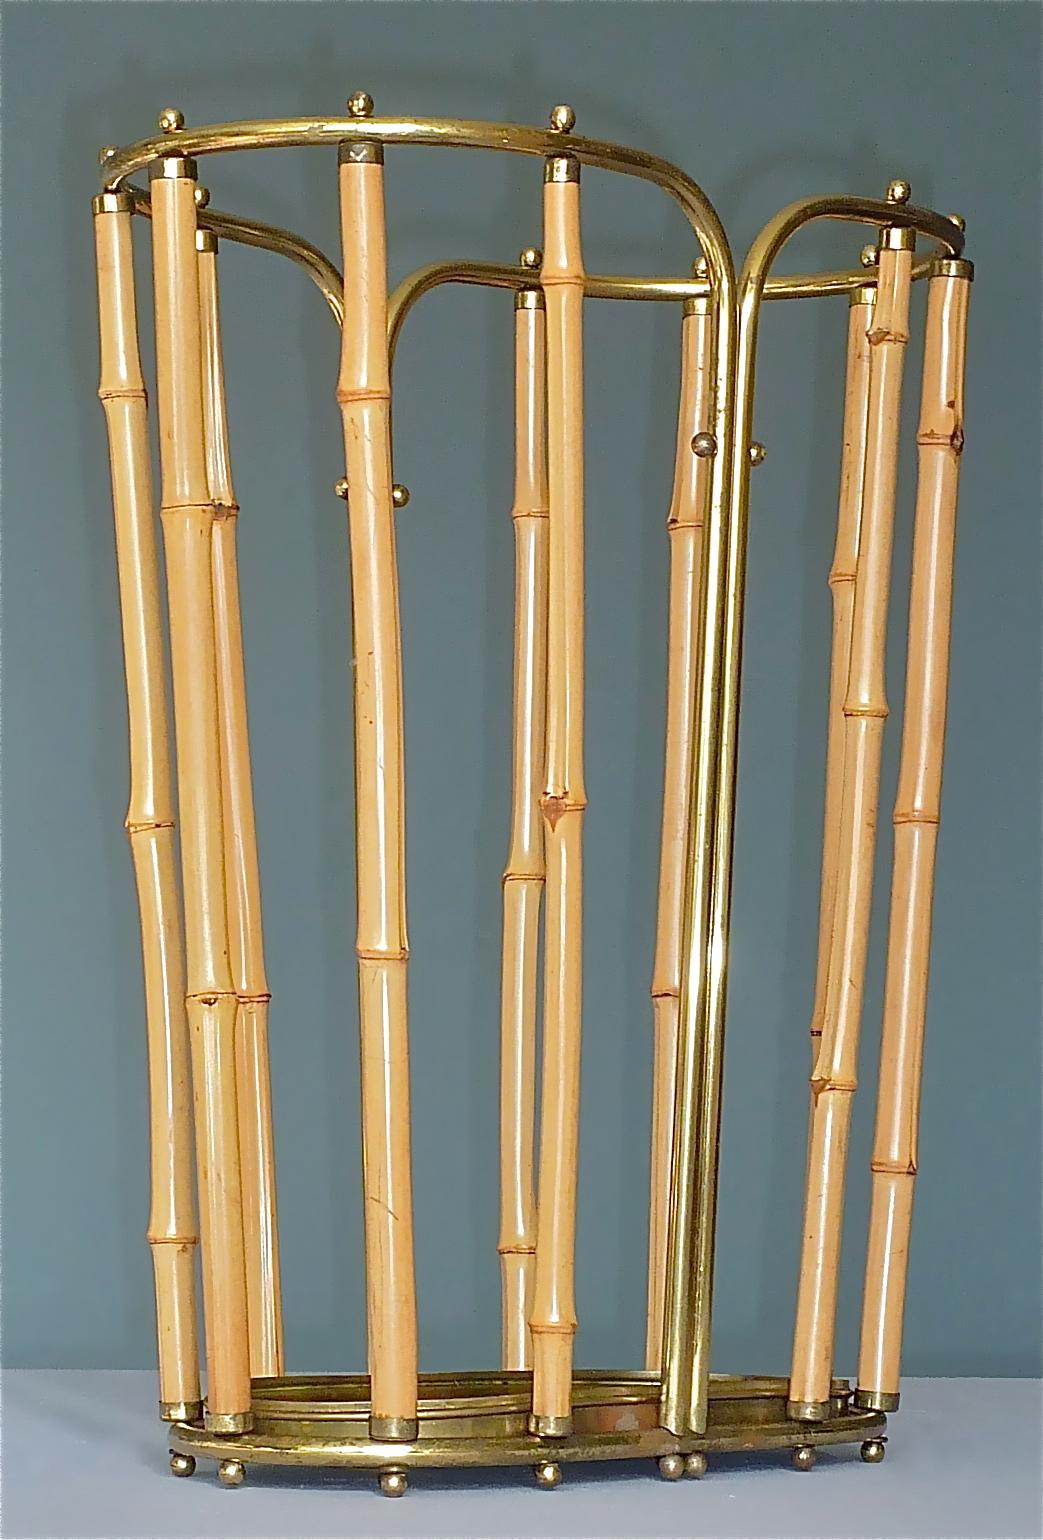 1950s Austrian Modernist Umbrella Stand Brass Bamboo, Josef Frank, Auböck Style For Sale 1